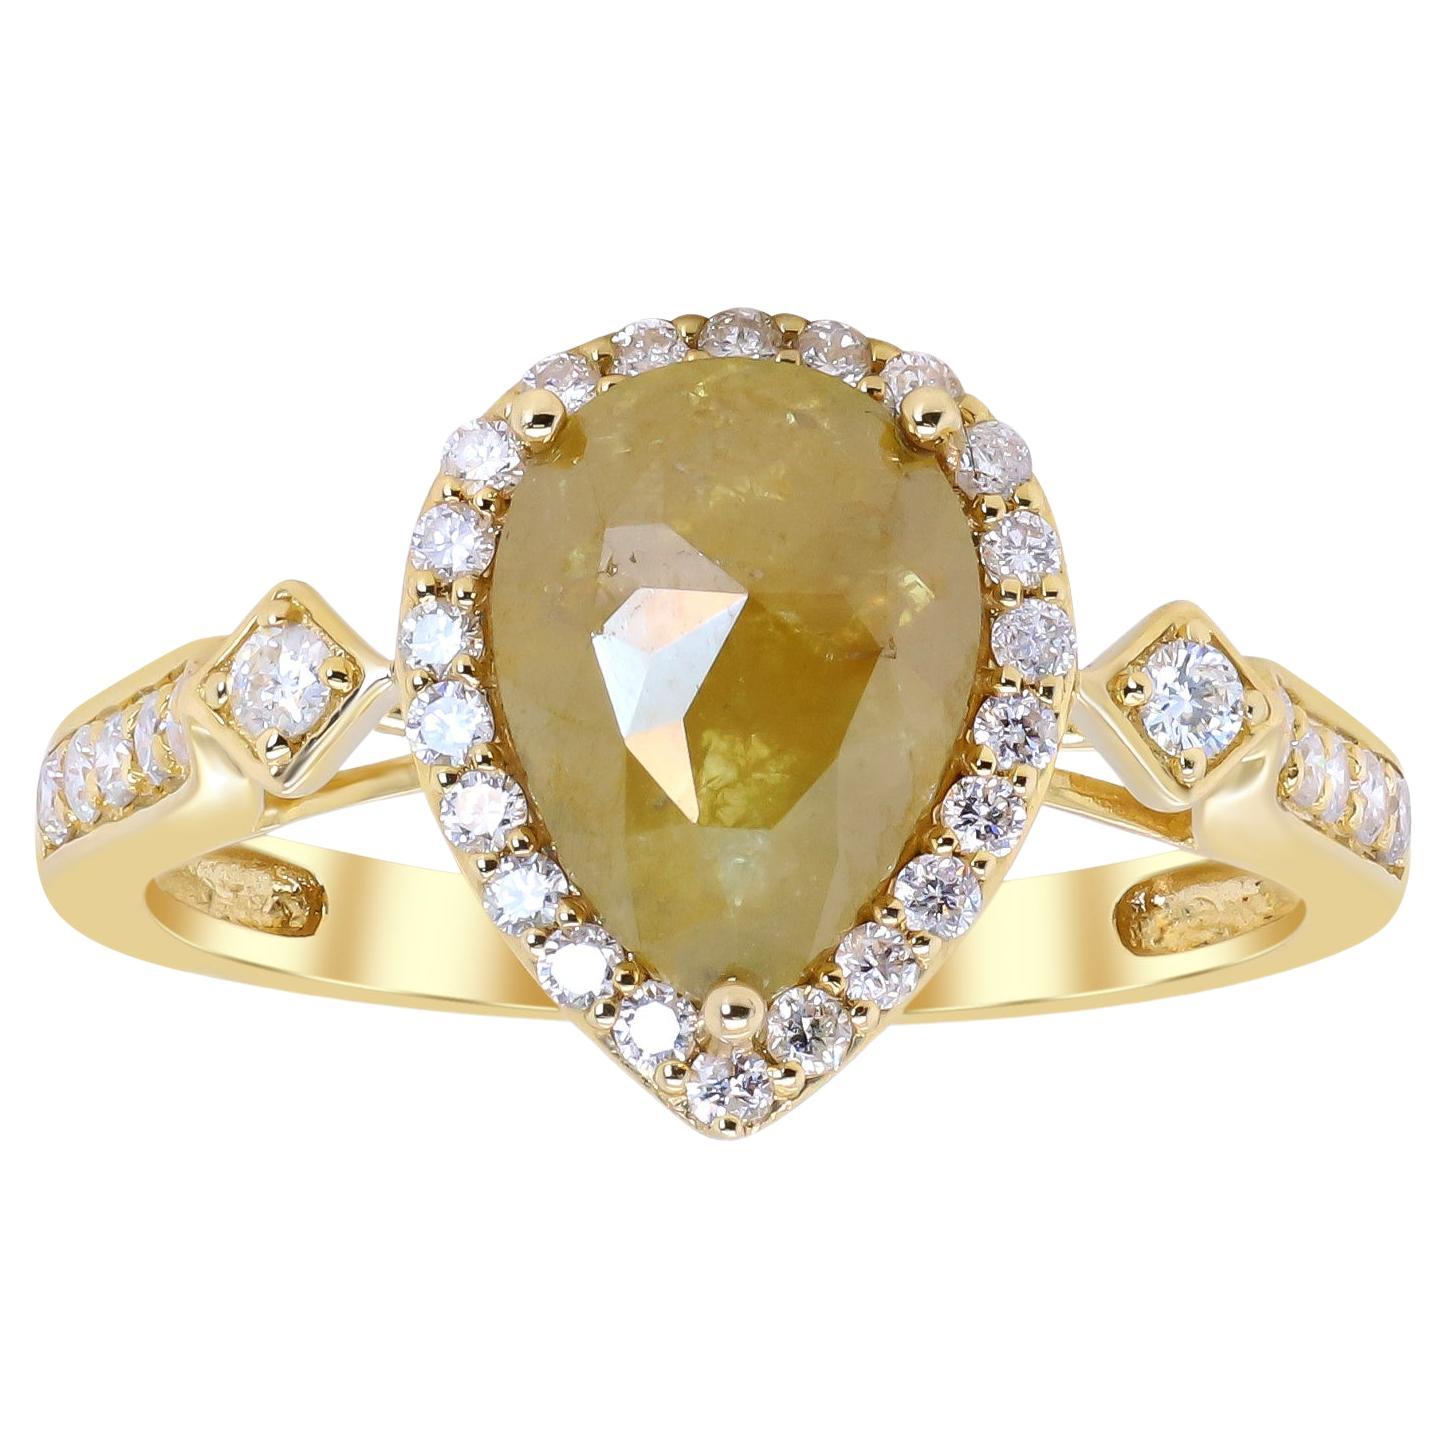 2.40 Carat Brown Diamond with Round-Cut White Diamond 14K Yellow Gold Ring